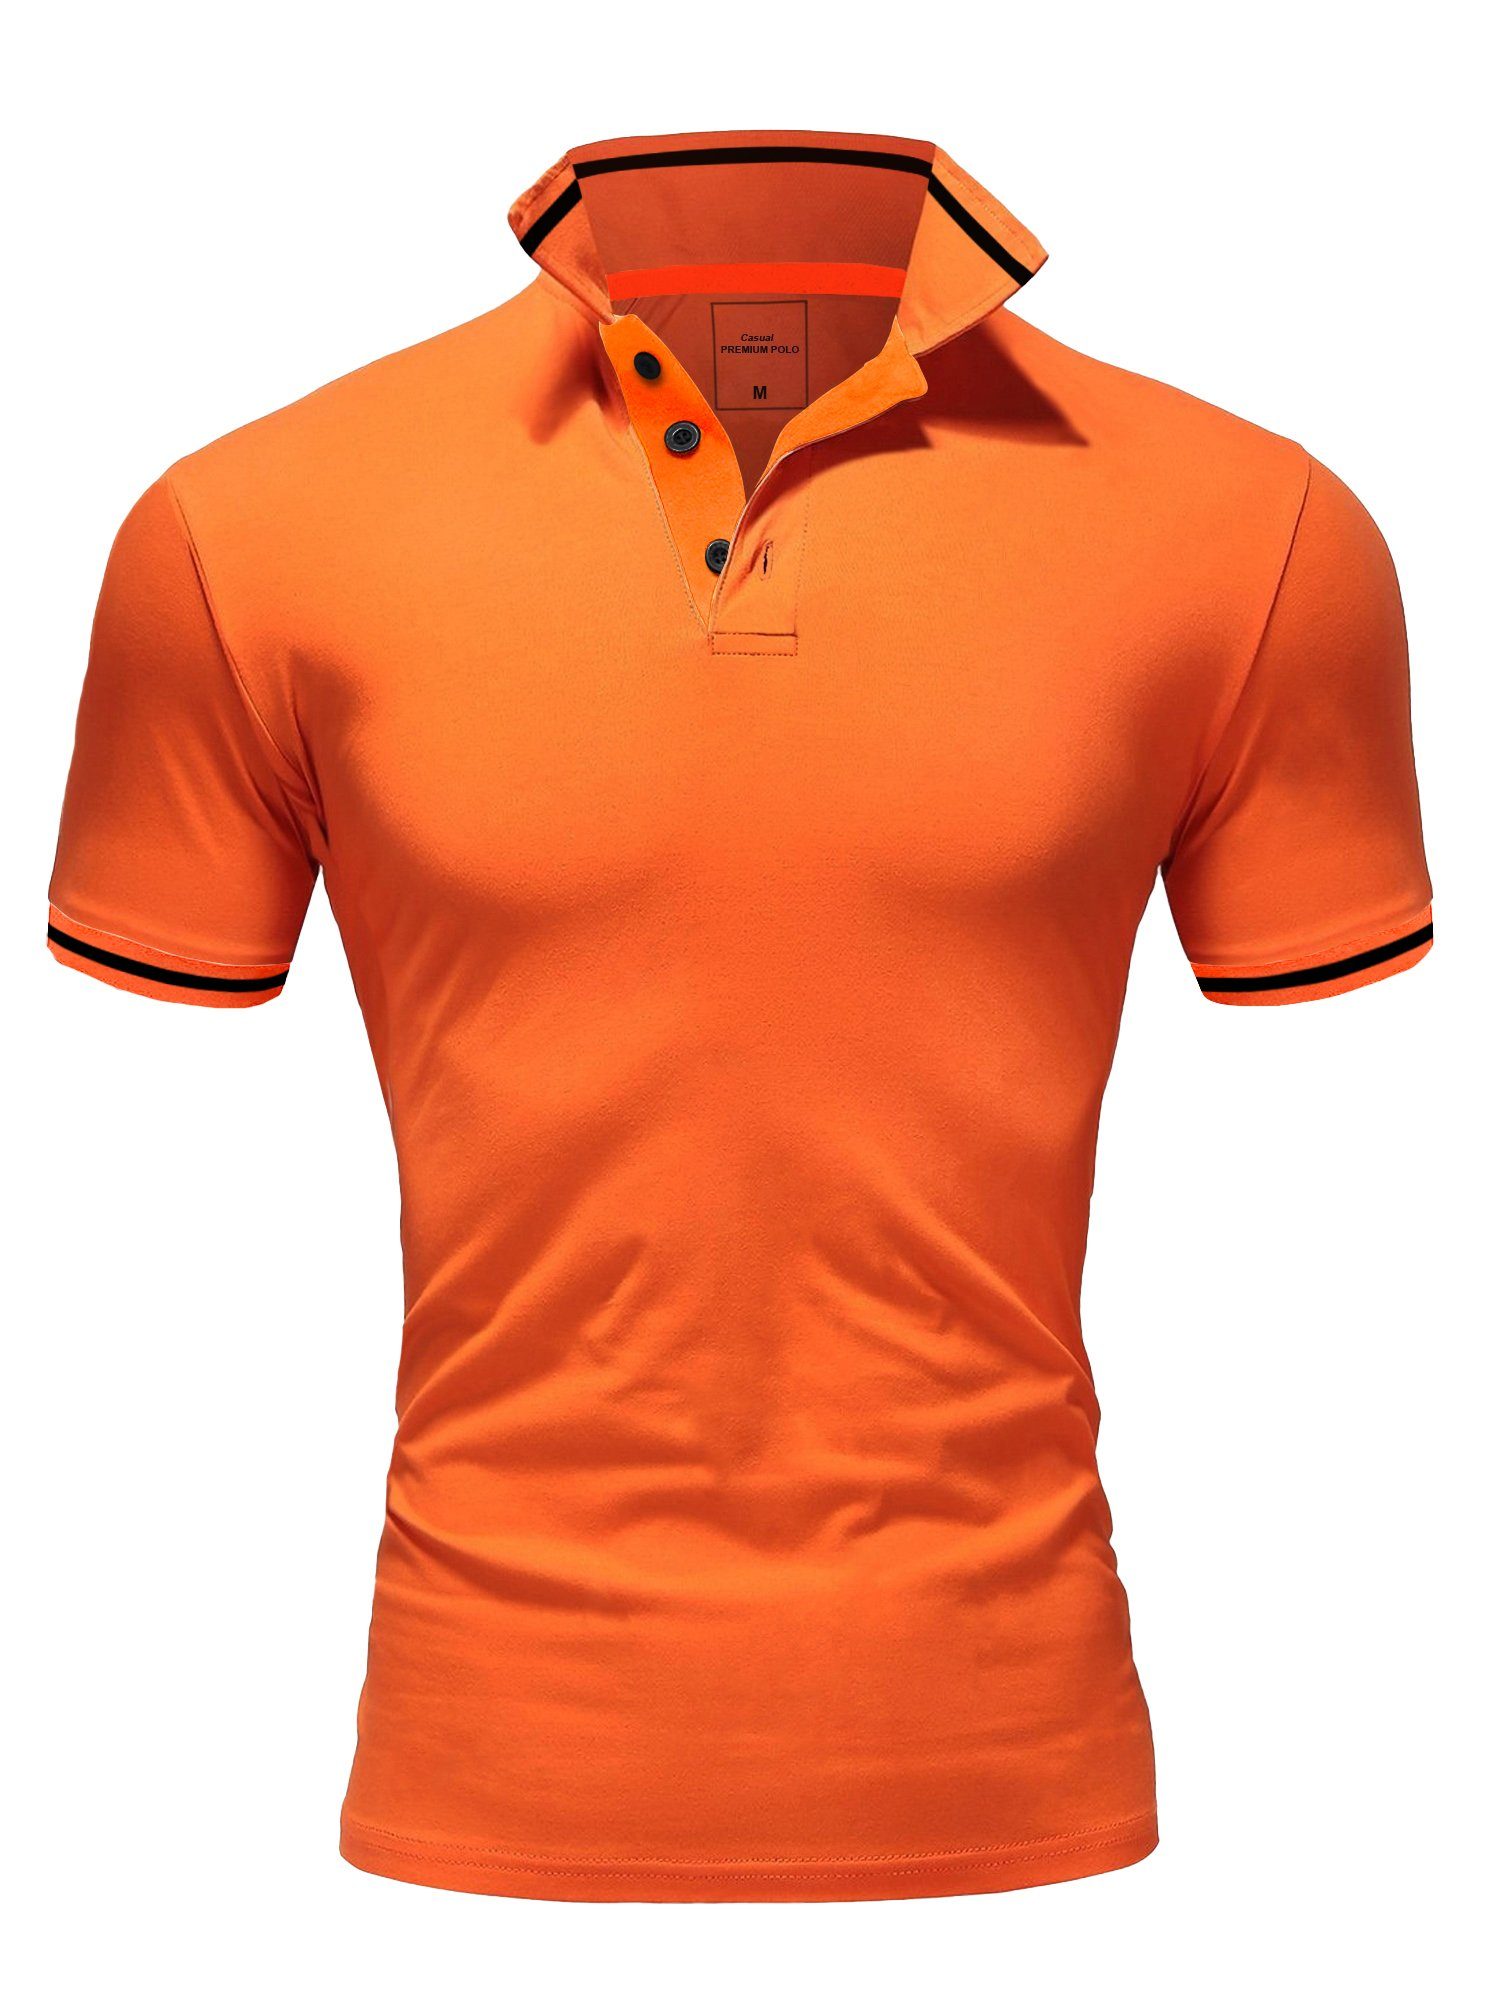 Amaci&Sons Poloshirt PROVIDENCE Herren Basic Kontrast Kurzarm Polohemd T-Shirt Orange/Schwarz